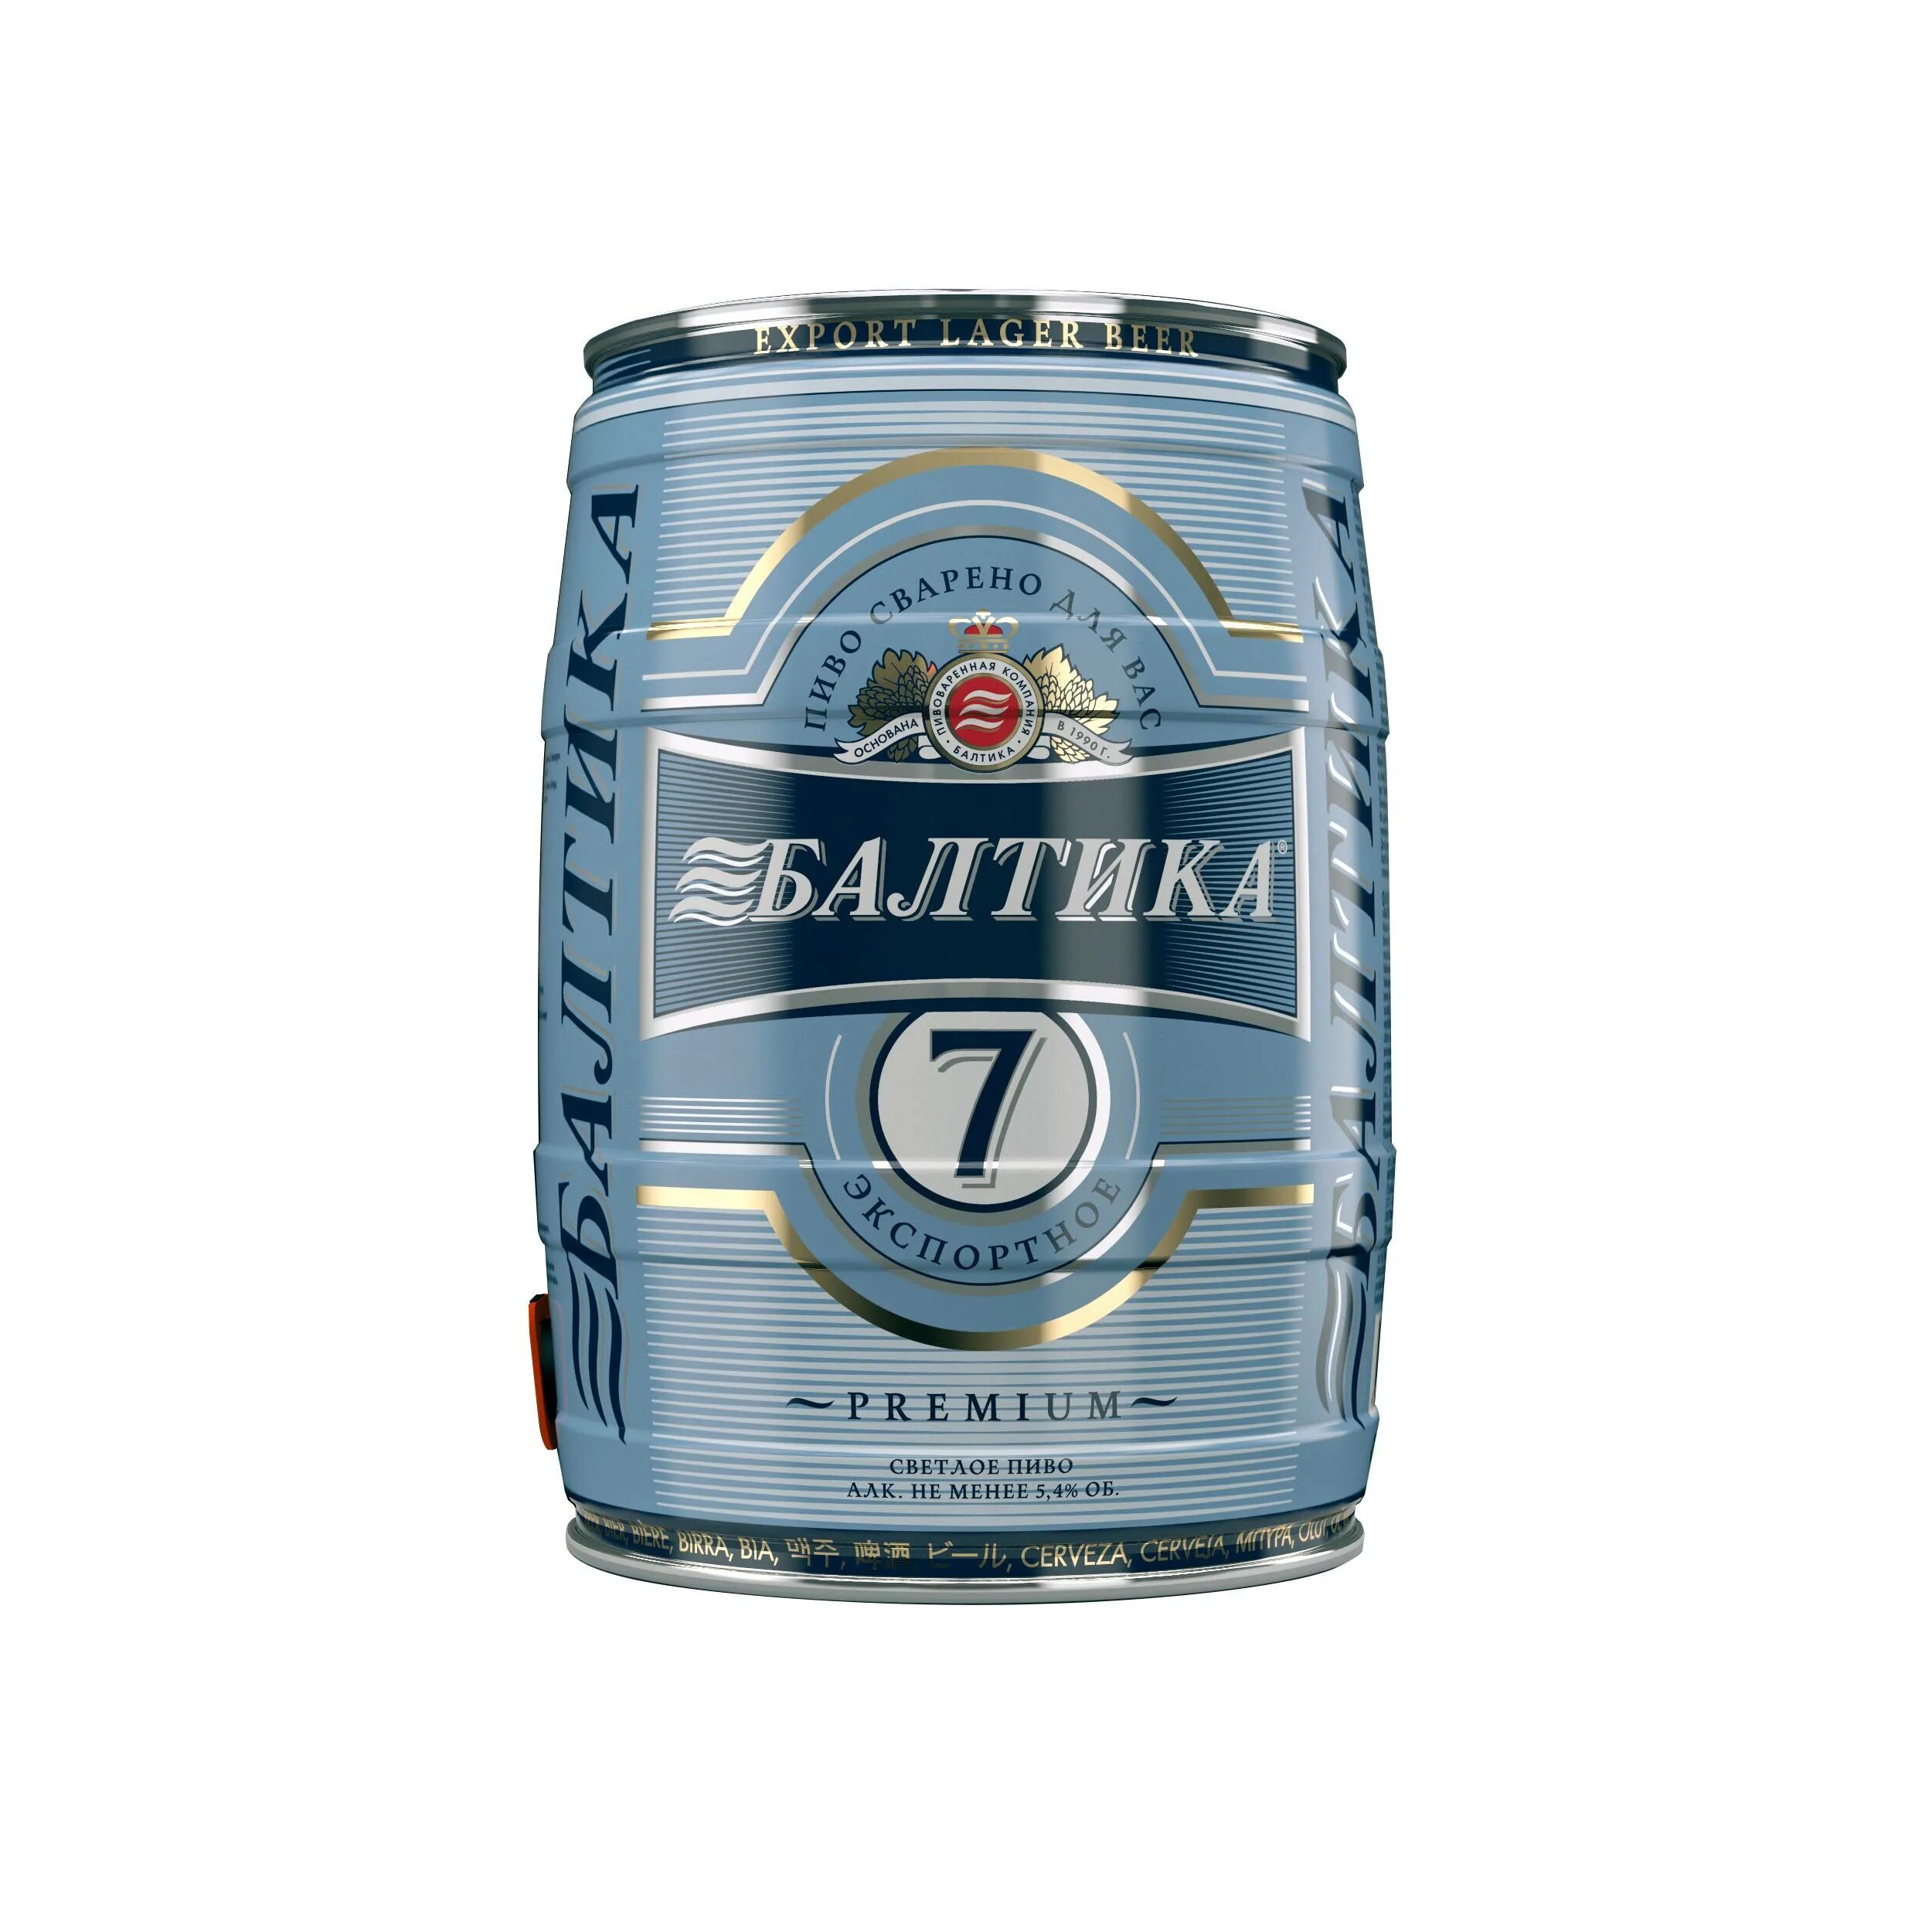 Бочонок 5 литров пиво Балтика. Пиво Балтика 7 1.5 литра. Пиво Балтика 7 1 литр.